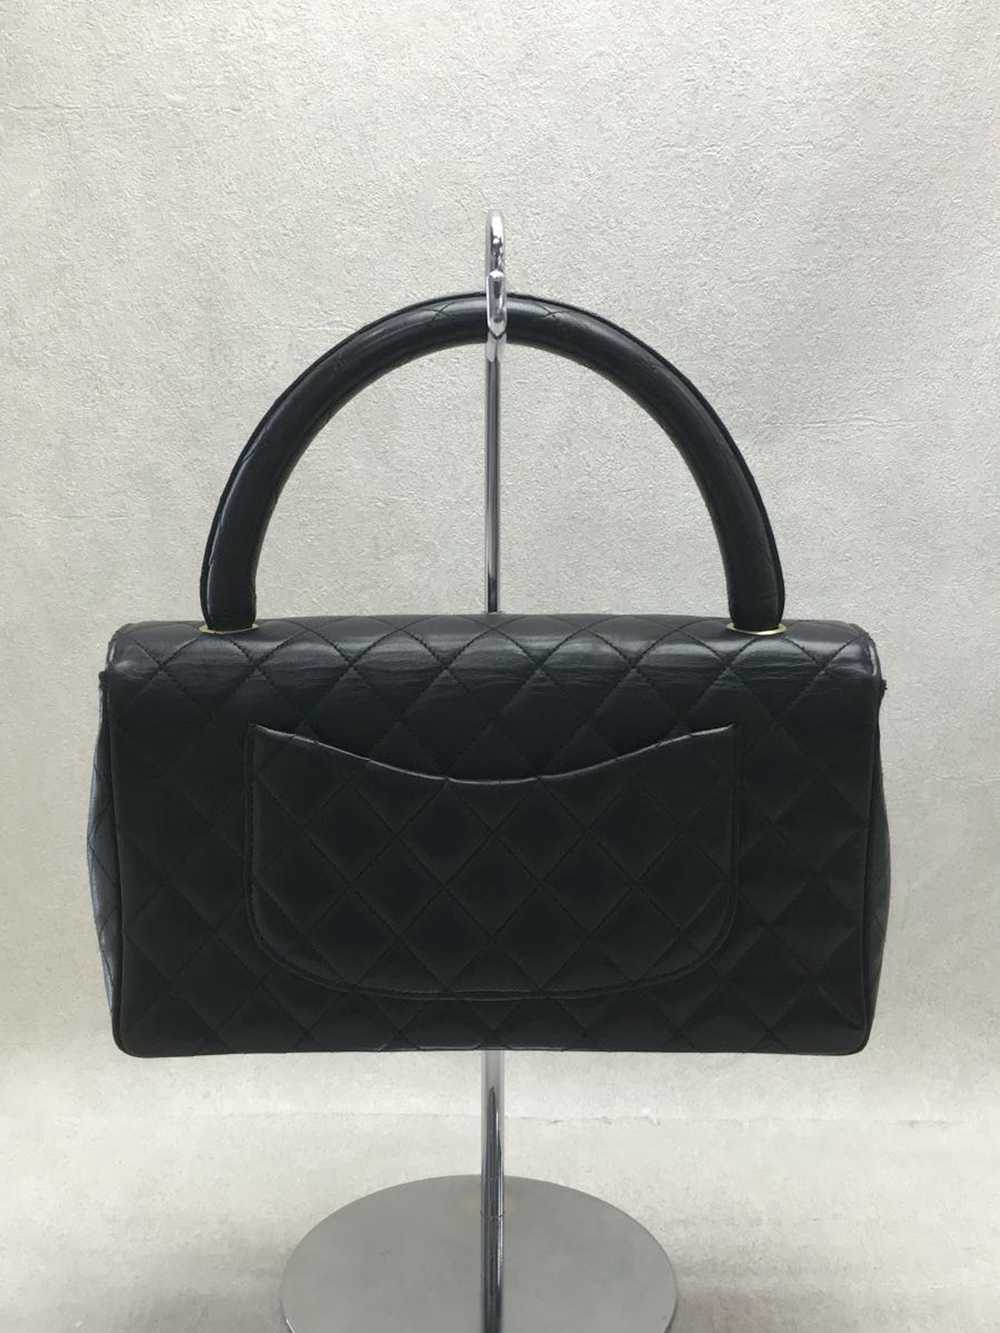 Chanel Chanel Caviar Leather Handbag Black - image 4